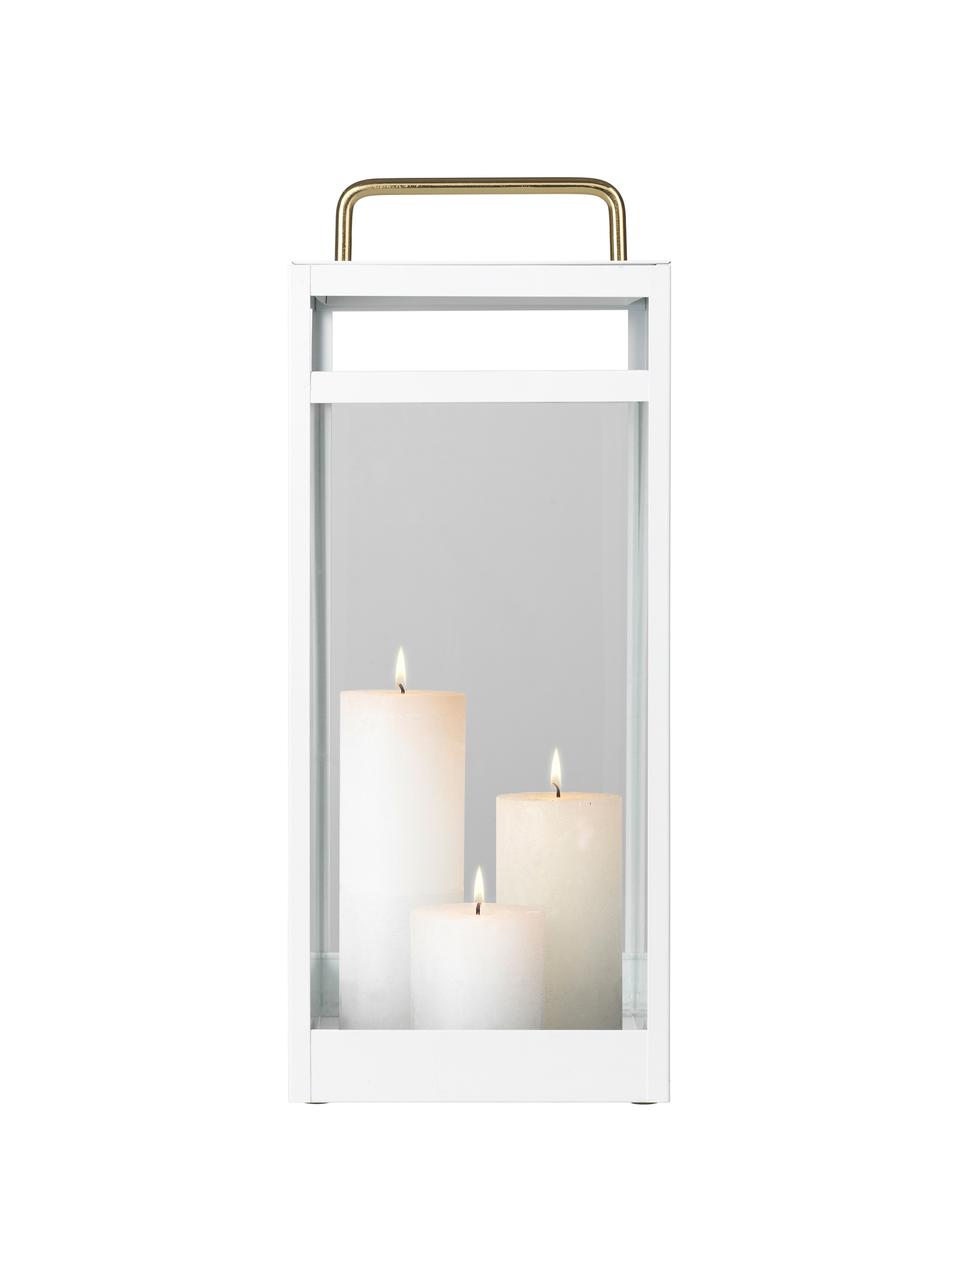 Lanterne Pure Nordic, Blanc, larg. 20 x haut. 56 cm